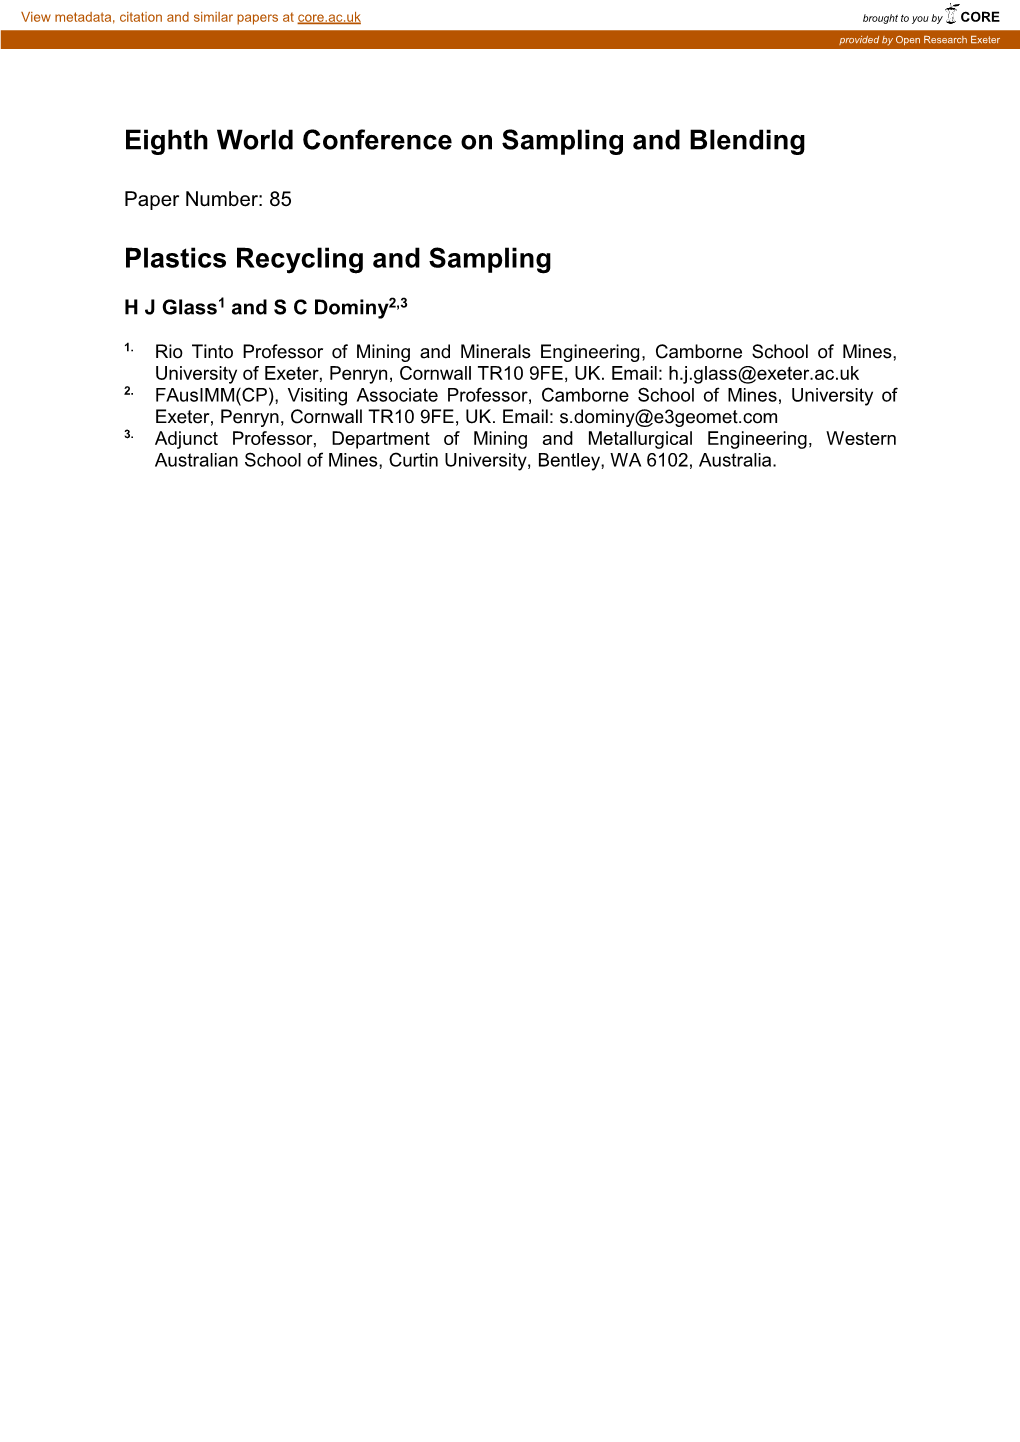 Plastics Recycling and Sampling